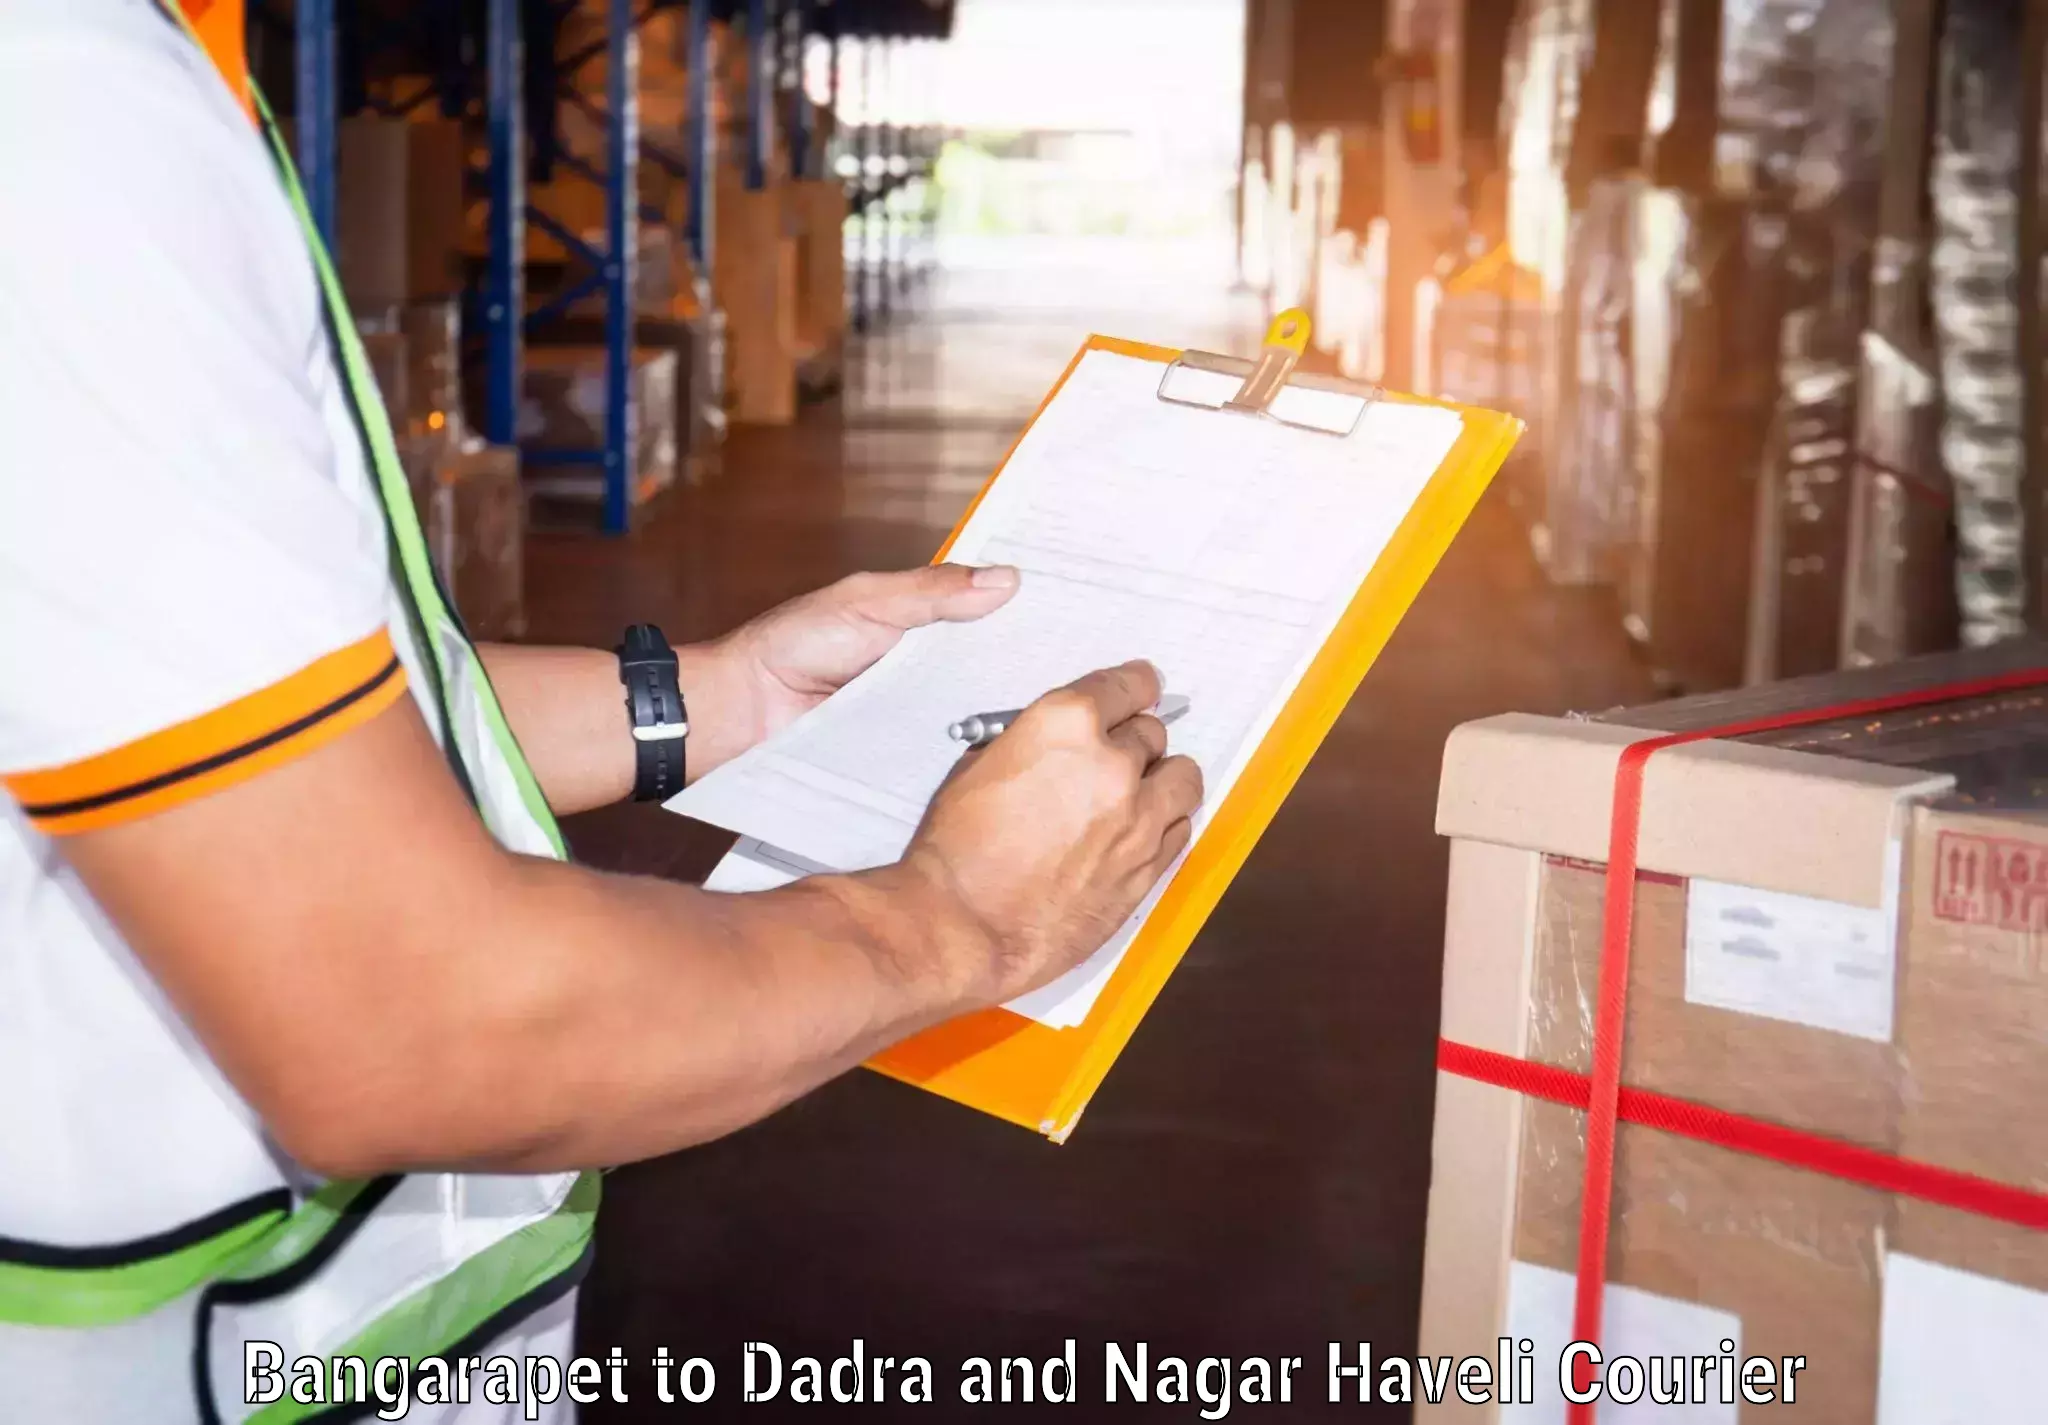 Fast delivery service Bangarapet to Dadra and Nagar Haveli